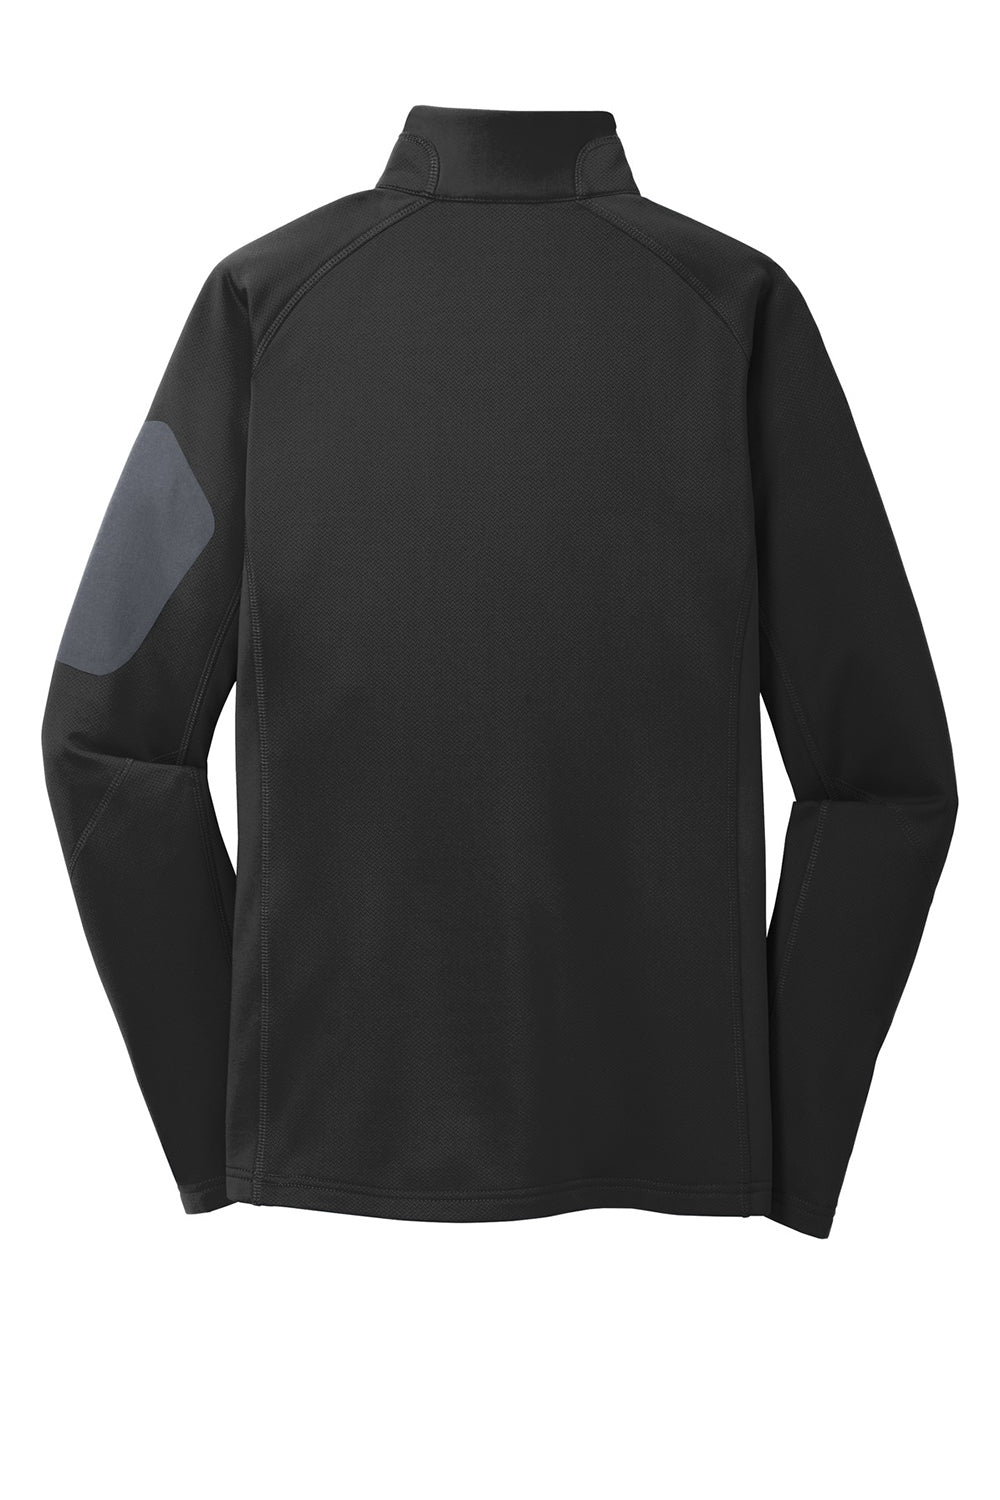 Eddie Bauer EB235 Womens Performance Fleece 1/4 Zip Sweatshirt Black Flat Back